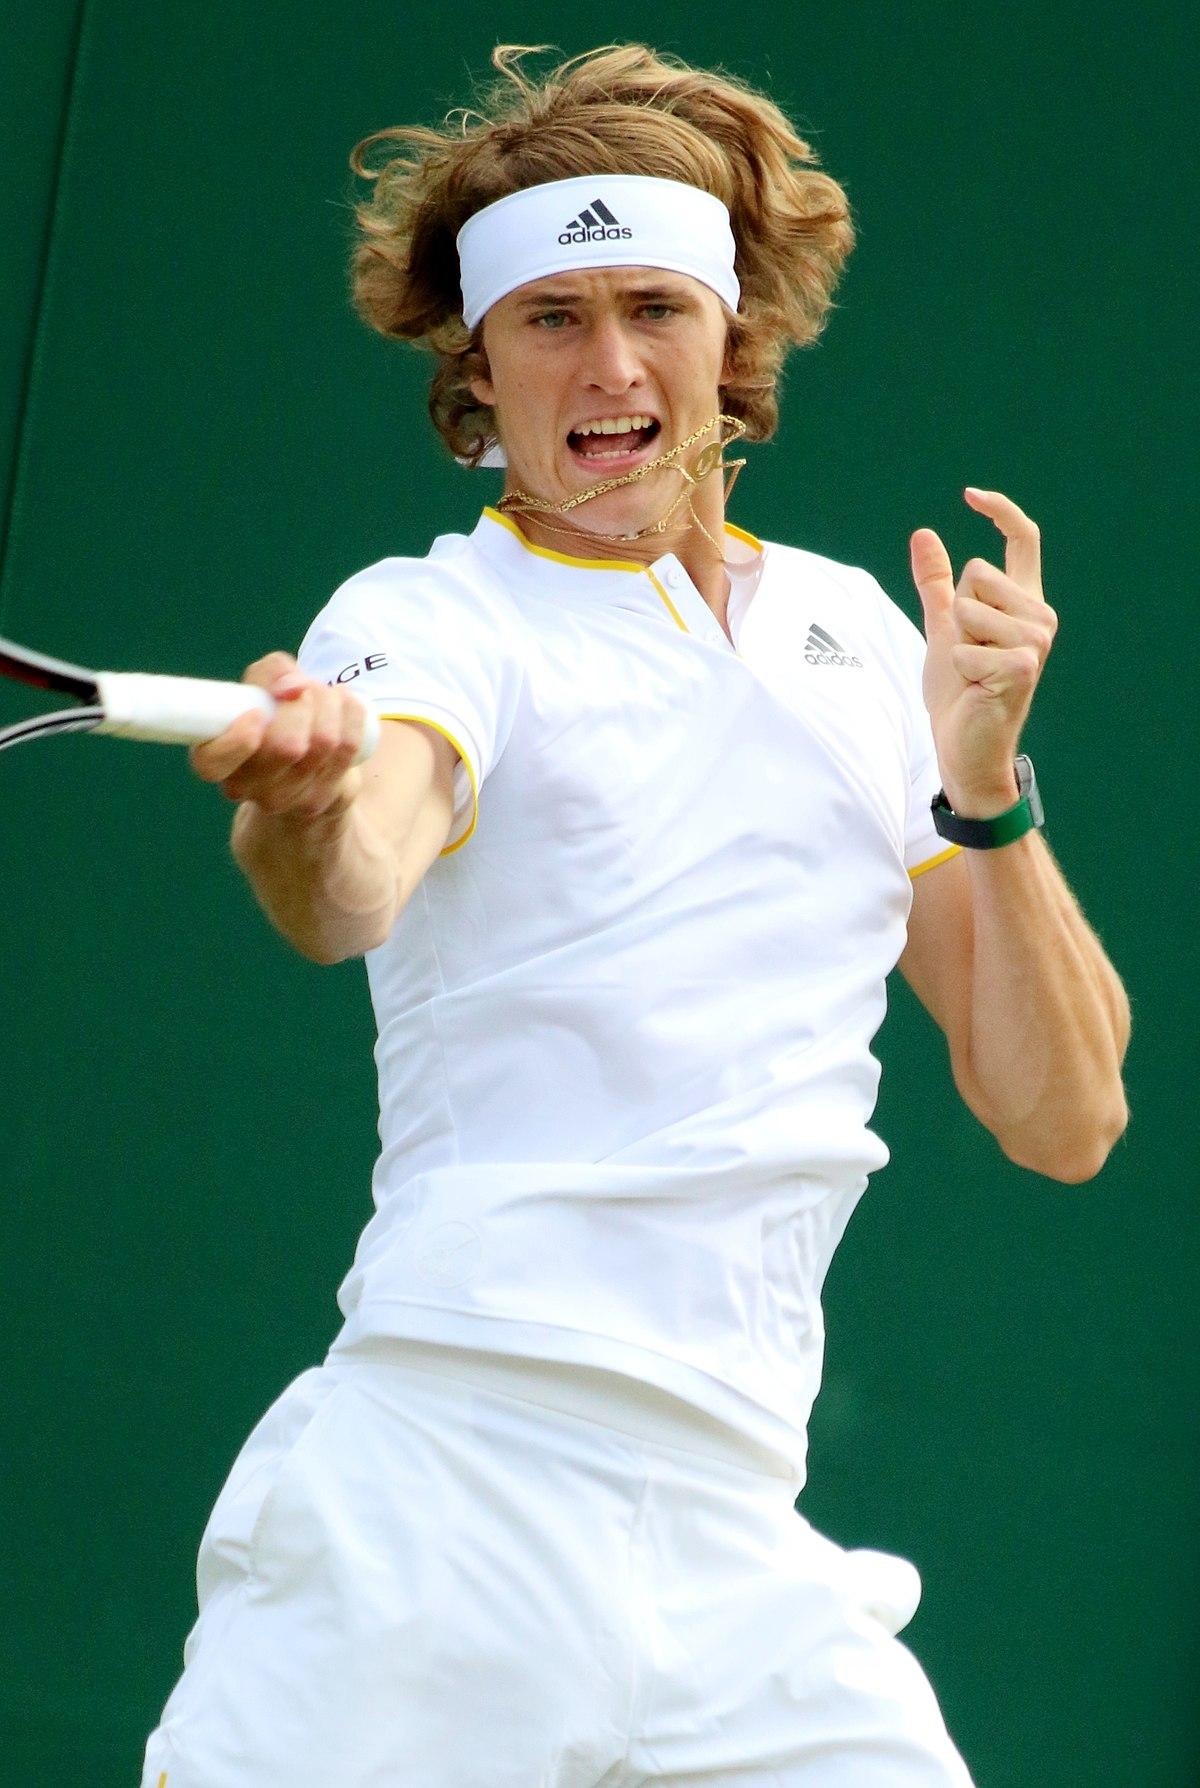 best wallpaper image about Alexander Satschko tennis player